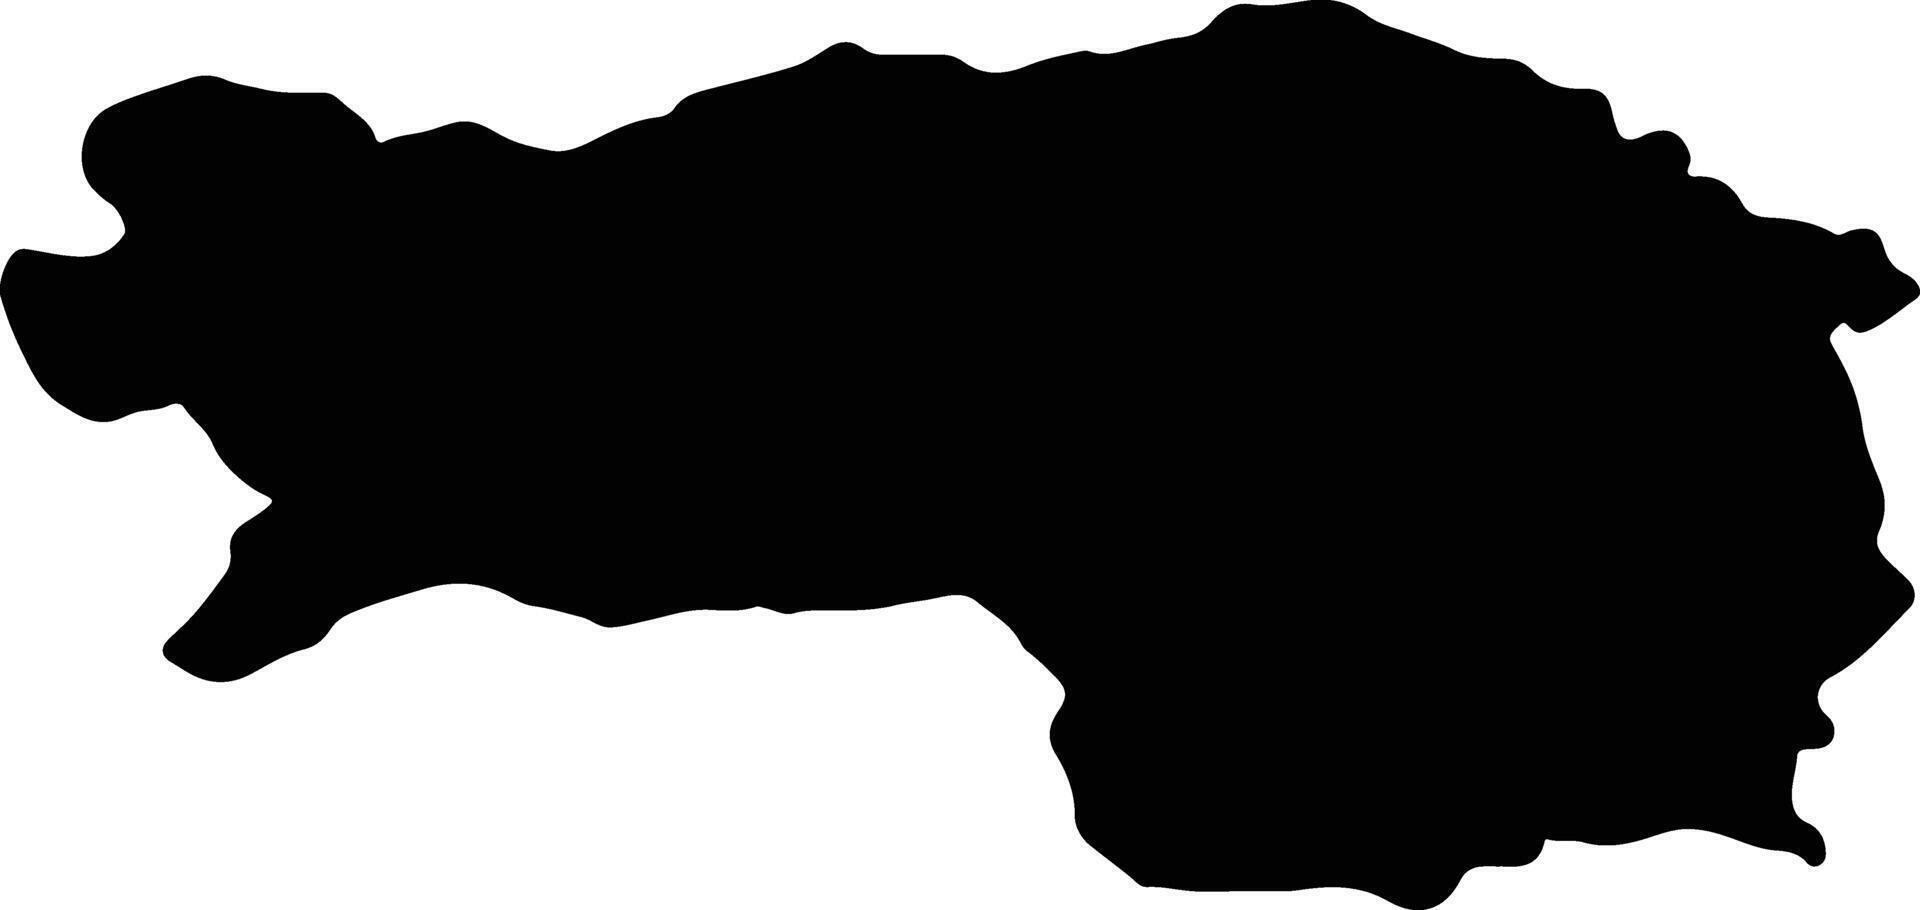 steiermark Austria silhouette carta geografica vettore